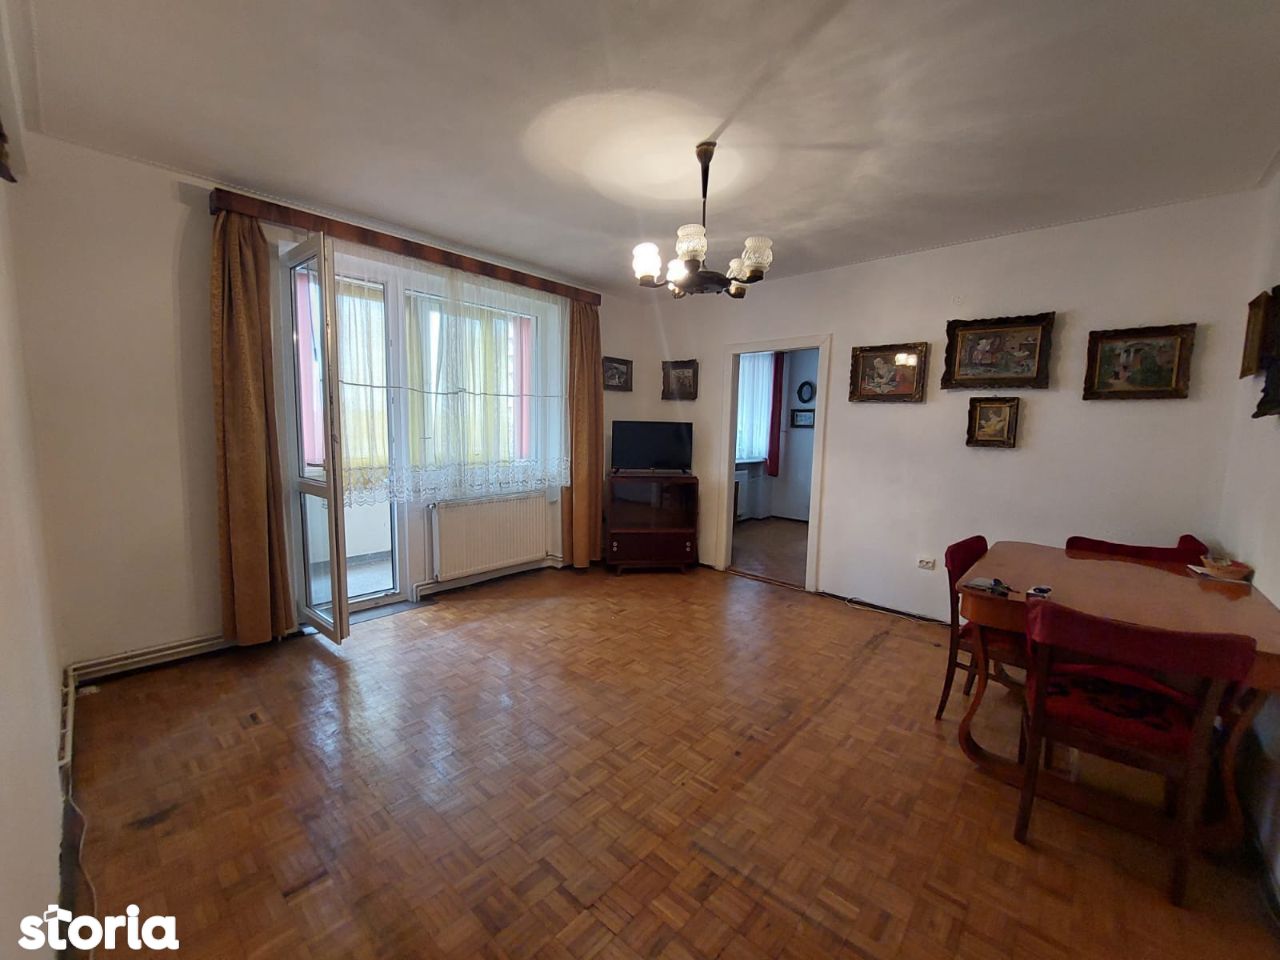 Apartament 2 camere cu balcon 9 mp - Etaj 2 din 4 - Terezian Sibiu